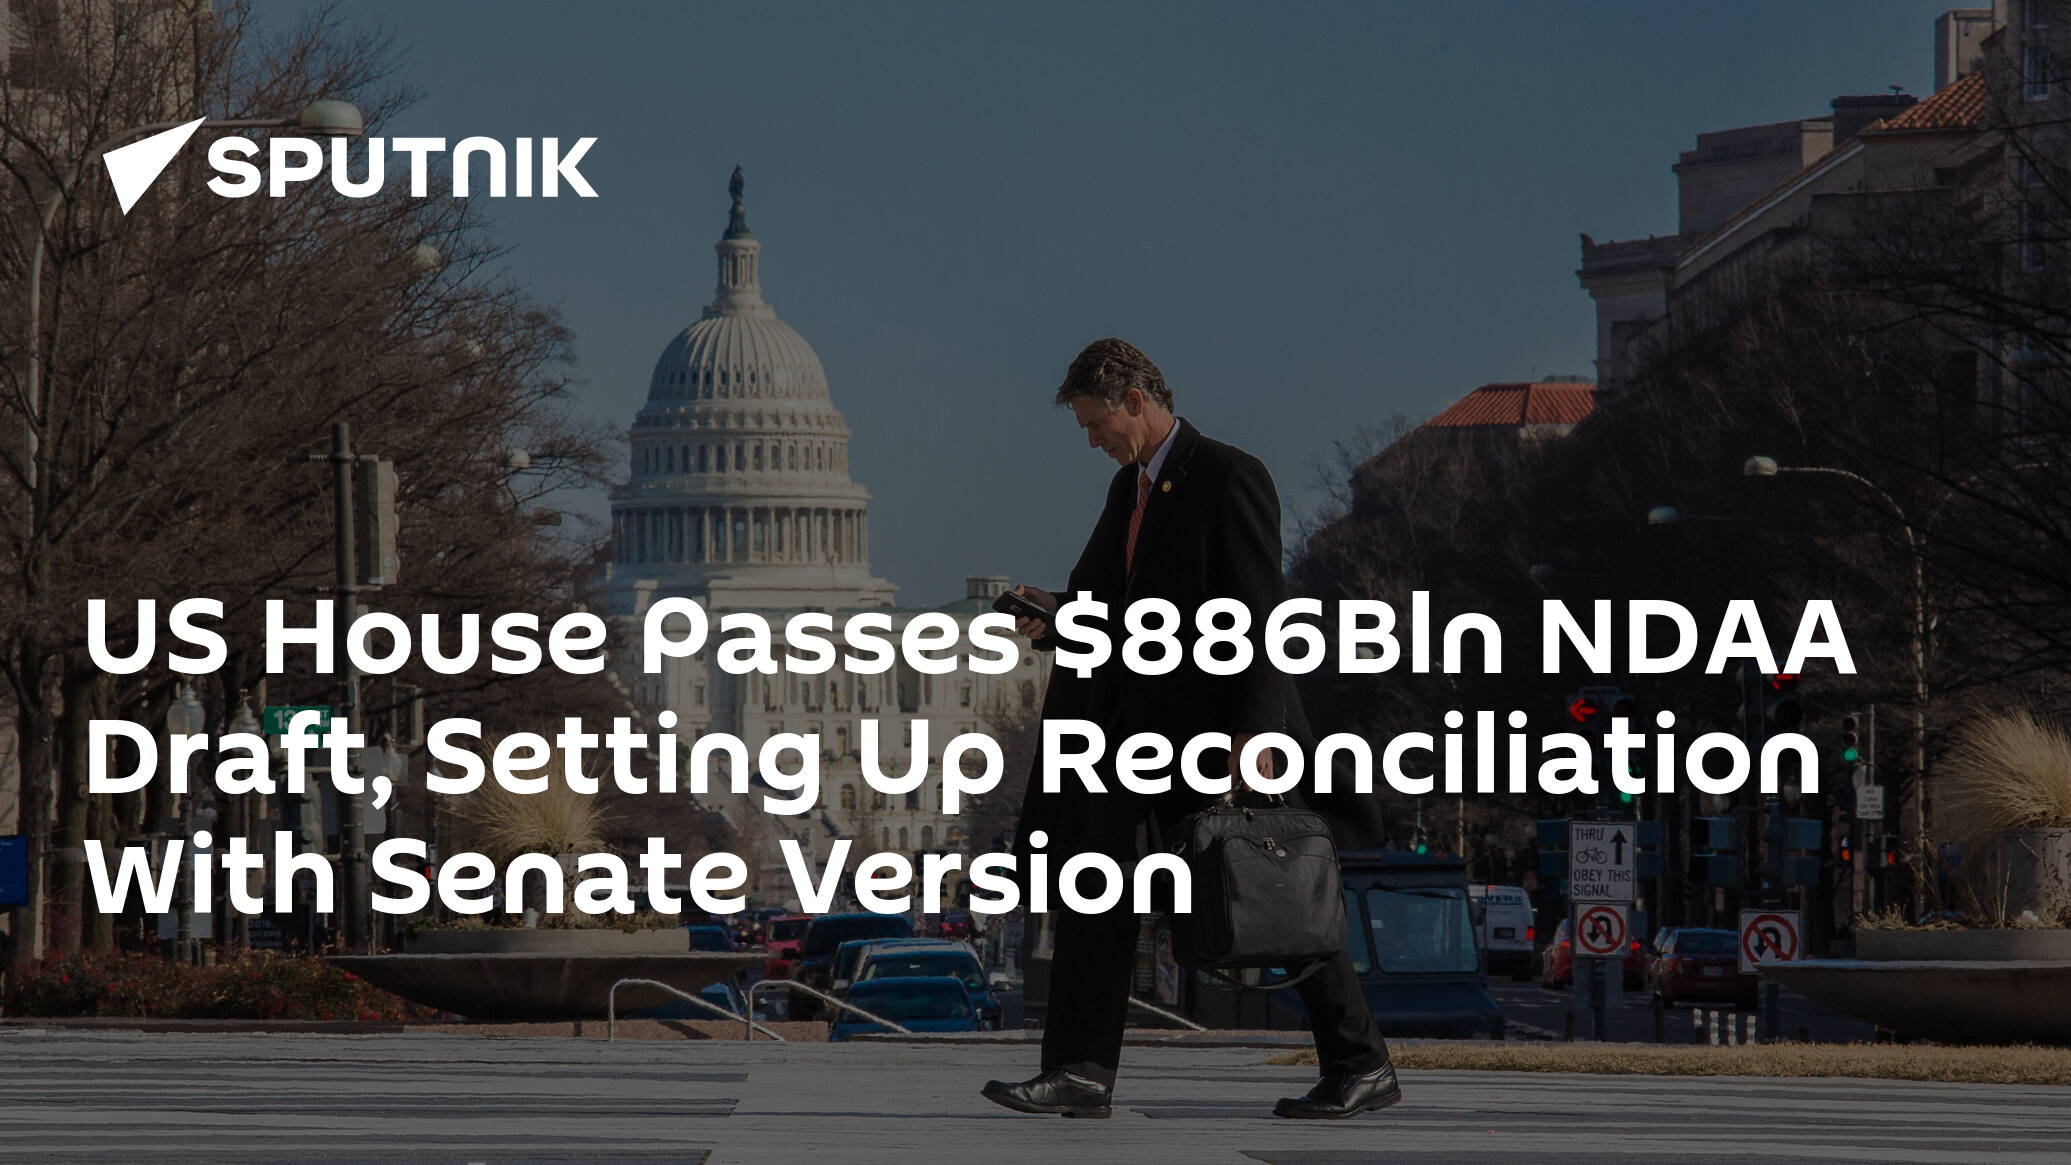 US House Passes 6Bln NDAA Draft, Setting Up Reconciliation With Senate Version